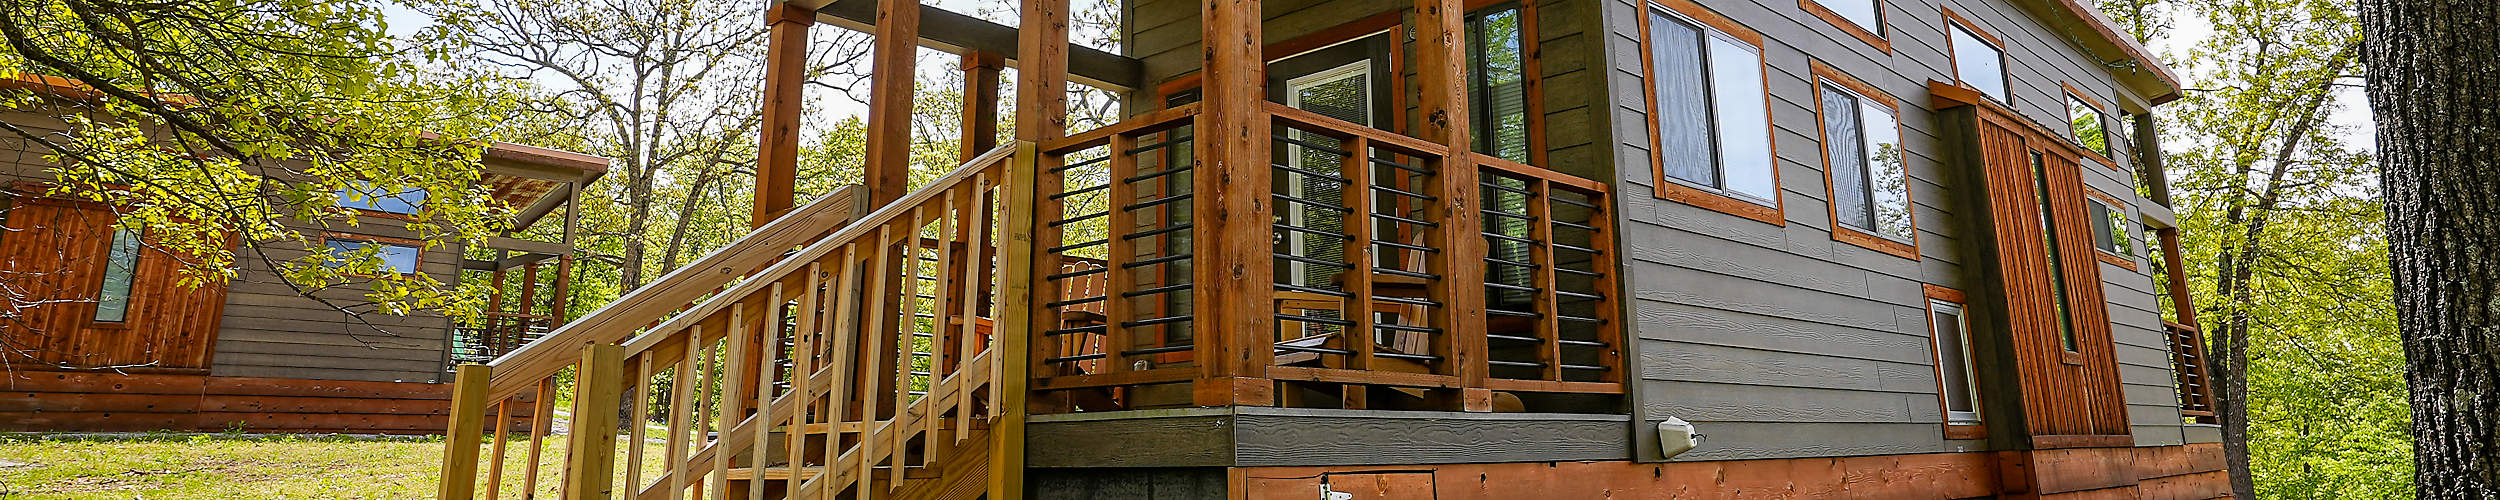 Branson Cedars Resort cottage/tiny home exterior